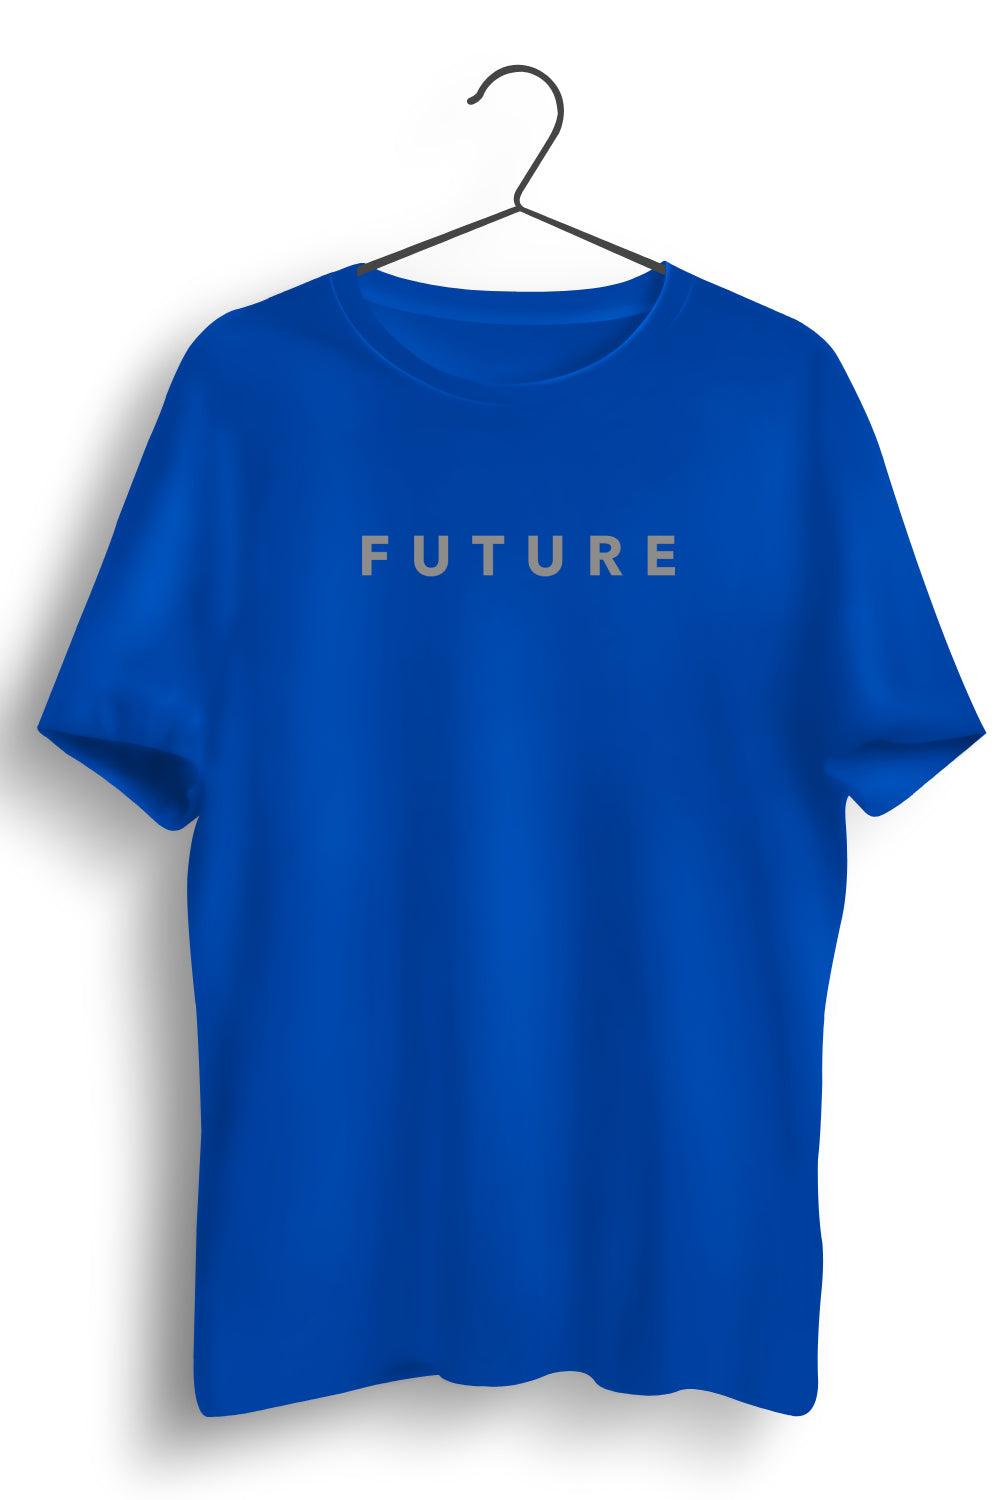 Future Reflective Print Blue Tshirt